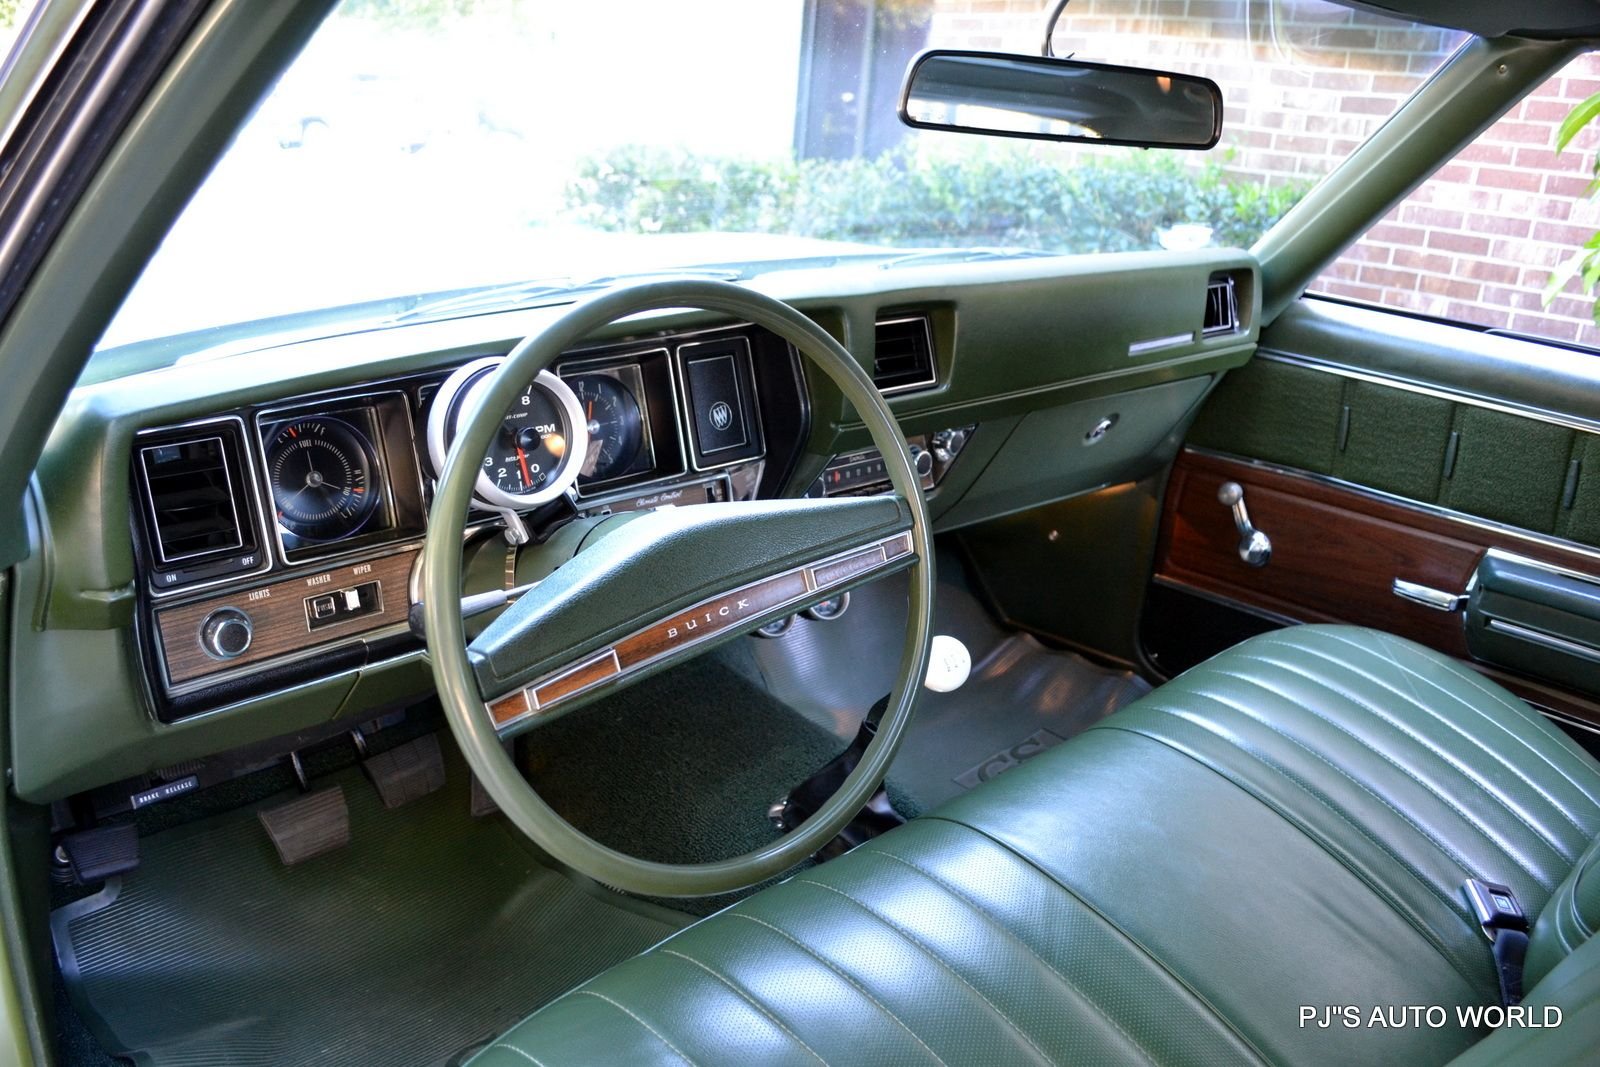 1972 Buick Skylark | PJ's Autoworld